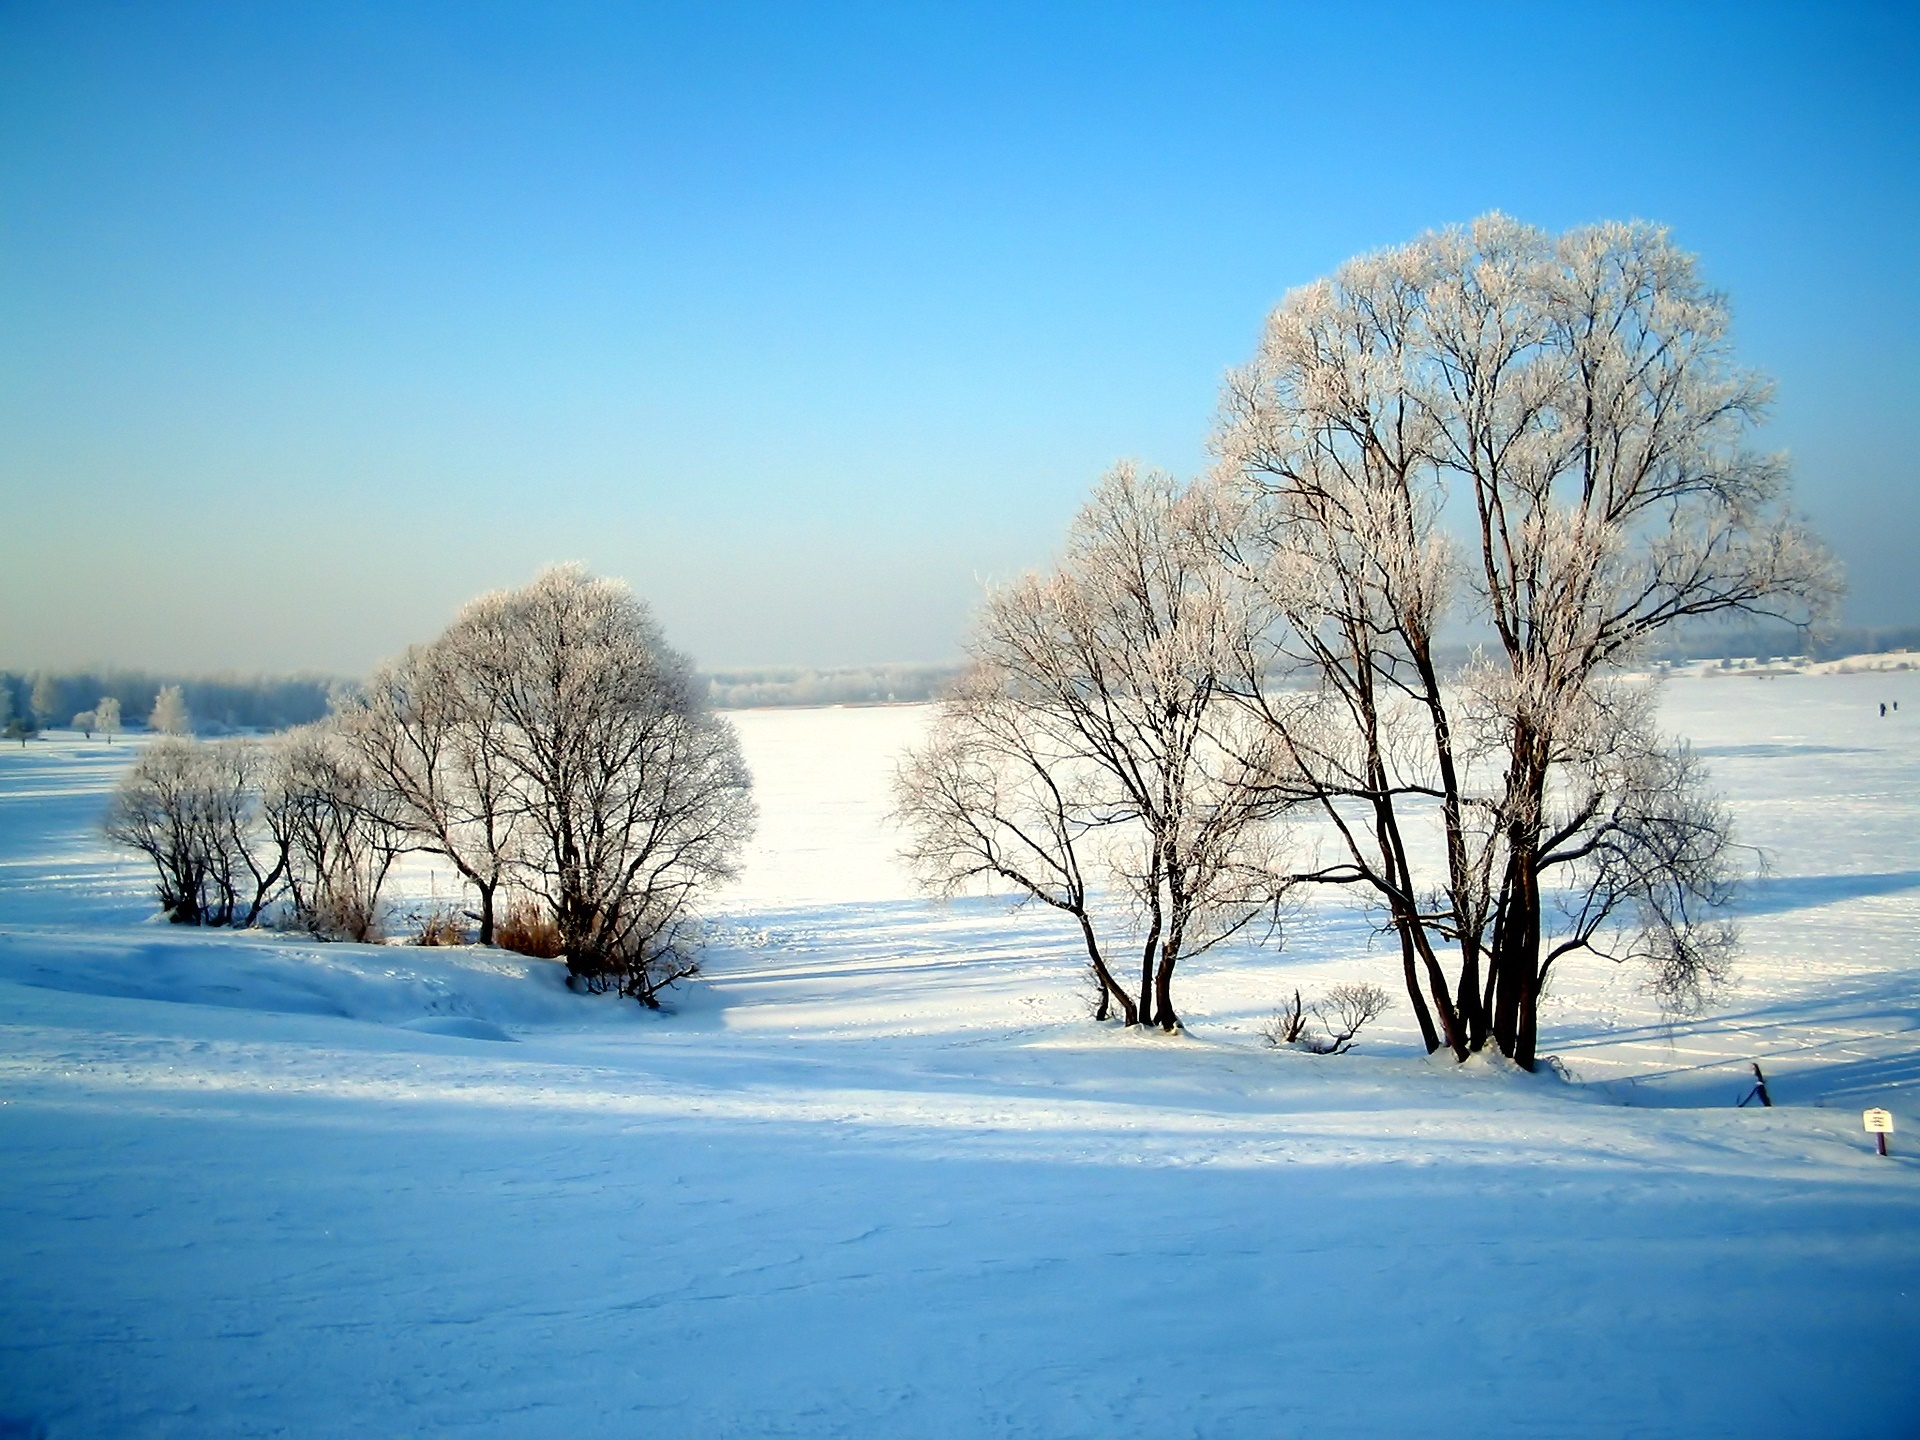 Пейзаж зимы. Зимний пейзаж. Зимняя природа. Зимний пейзаж деревья. Зимний пейзаж февраль.